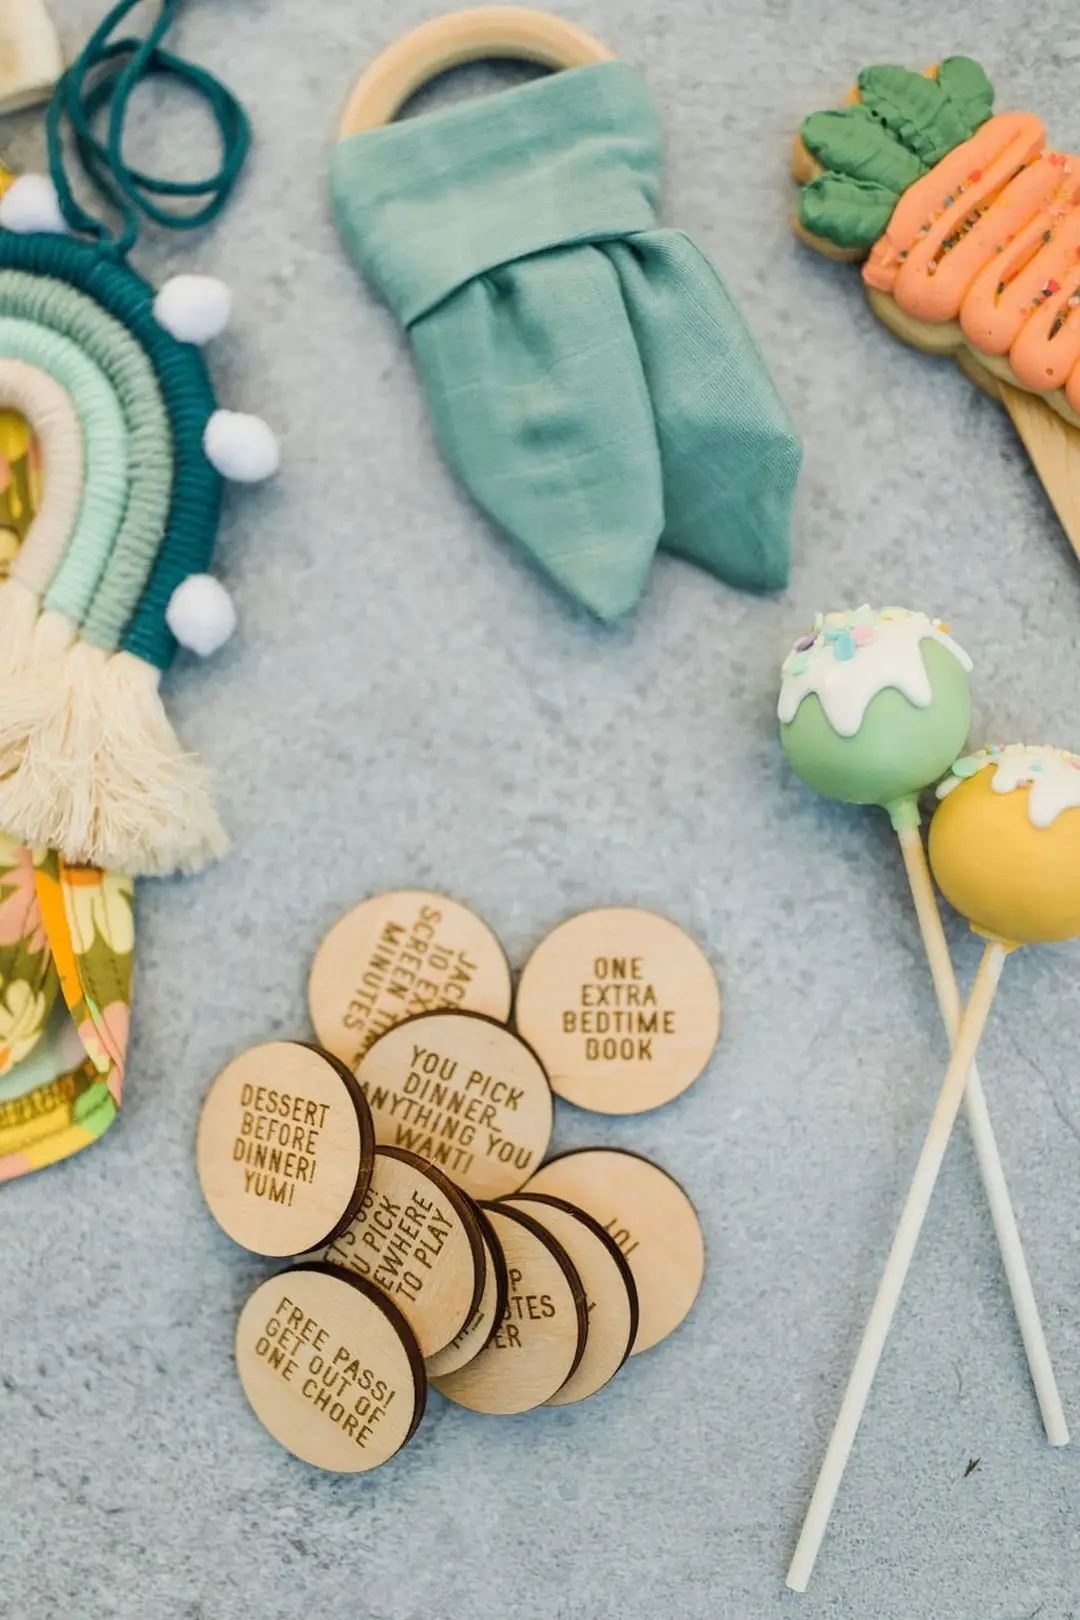 Easter basket ideas for boys